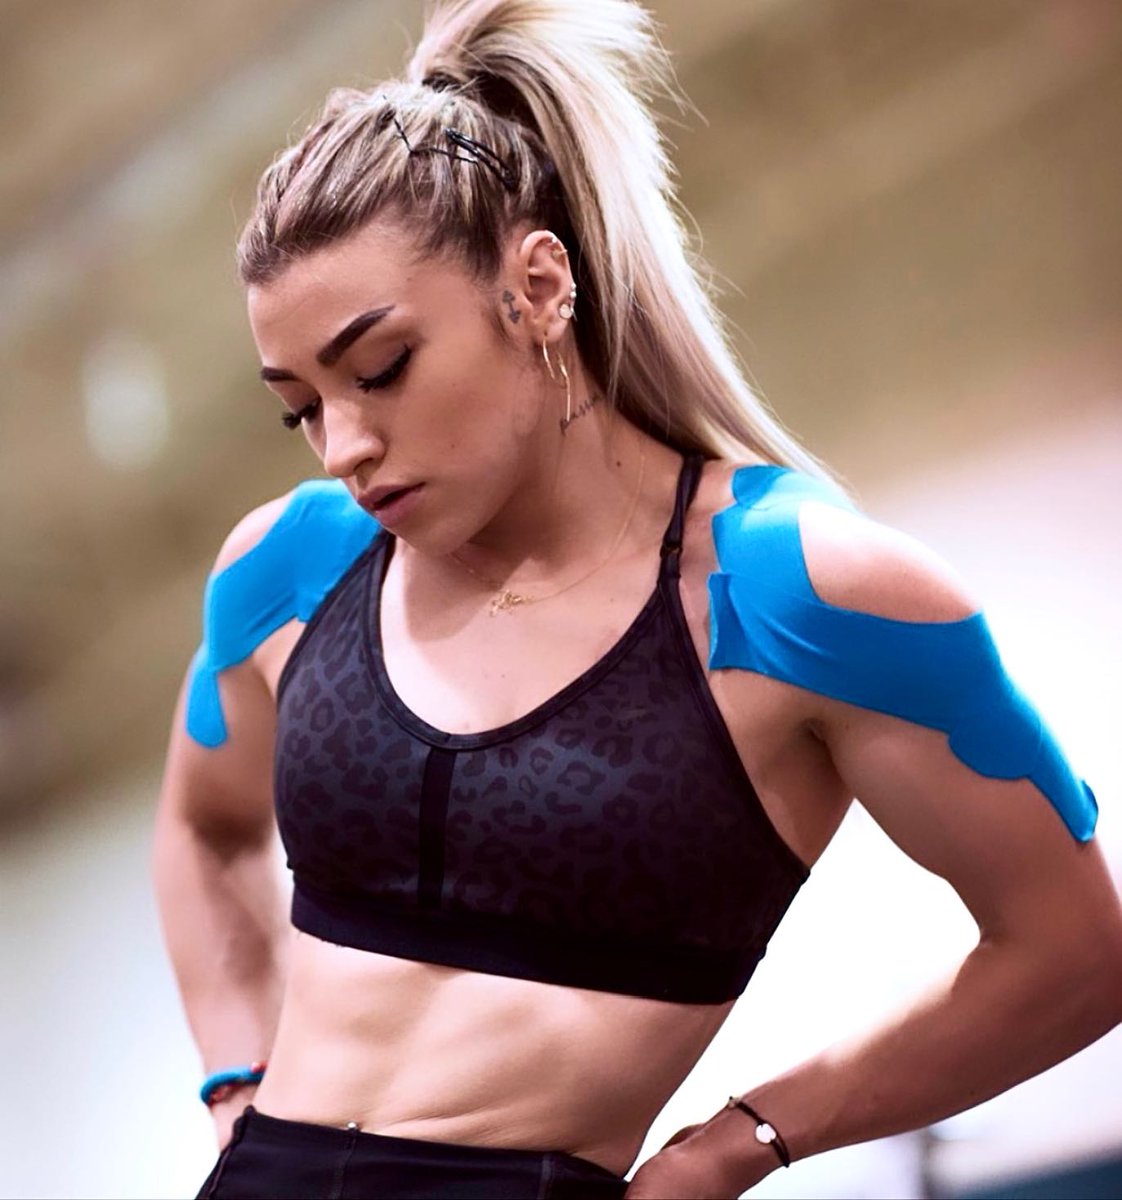 Cambei Mihaela Valentina
#musclewomen #bodybuilder #fitnessmodel #womensphysique #femalebodybuilding #fbb #femalemuscle #girlswholift #fitgirl